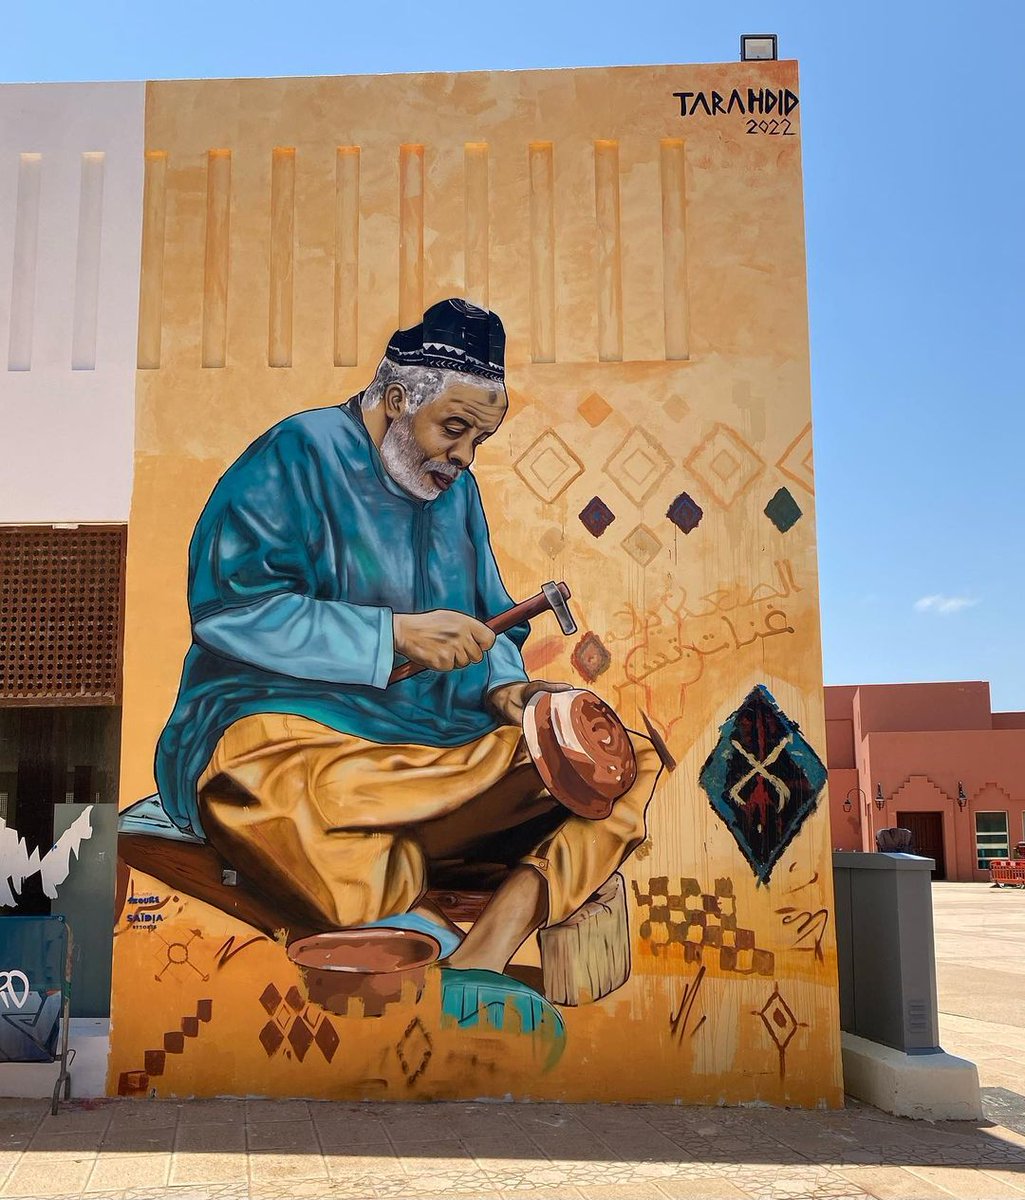 #Streetart by #SimoTara @ #Saidia, Morocco, for #CollectifTzouri
More info at: barbarapicci.com/2023/07/11/str…
#streetartSaidia #streetartMorocco #Moroccostreetart #arteurbana #urbanart #murals #muralism #contemporaryart #artecontemporanea